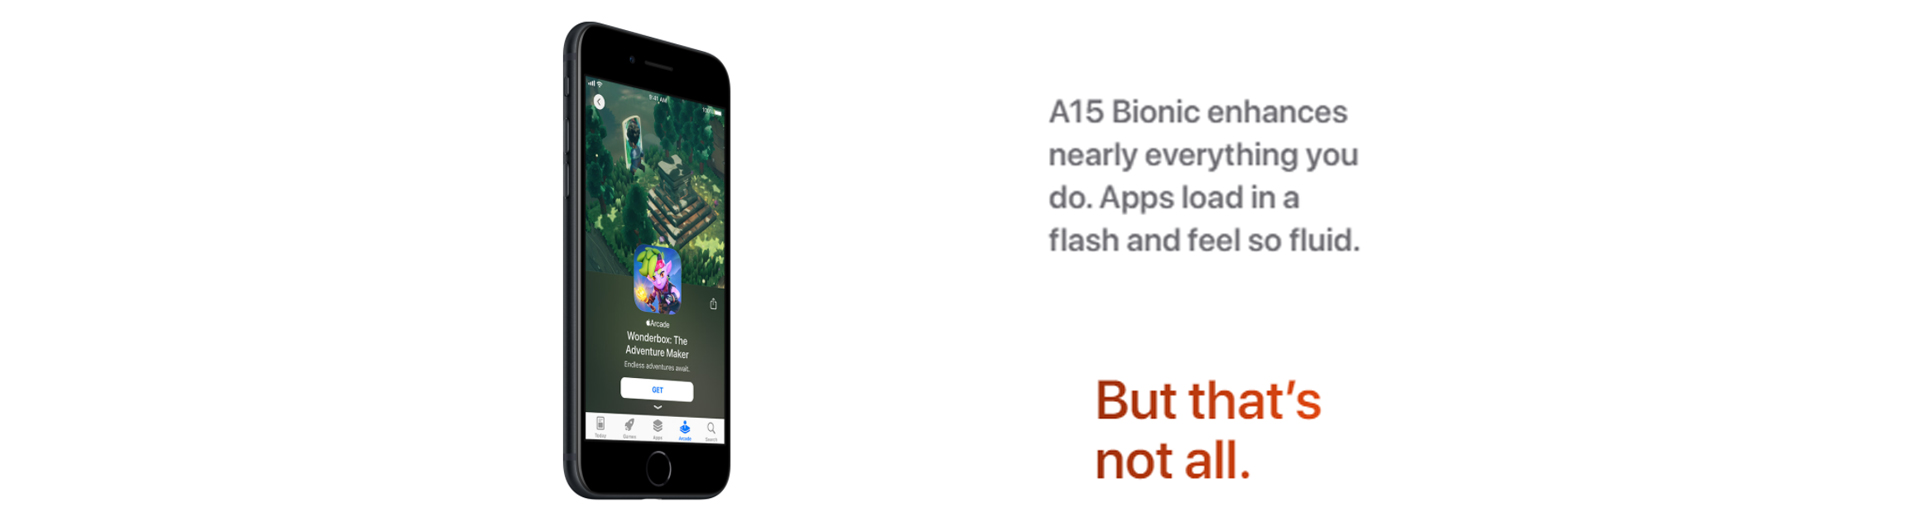 A15 Bionic Enhances